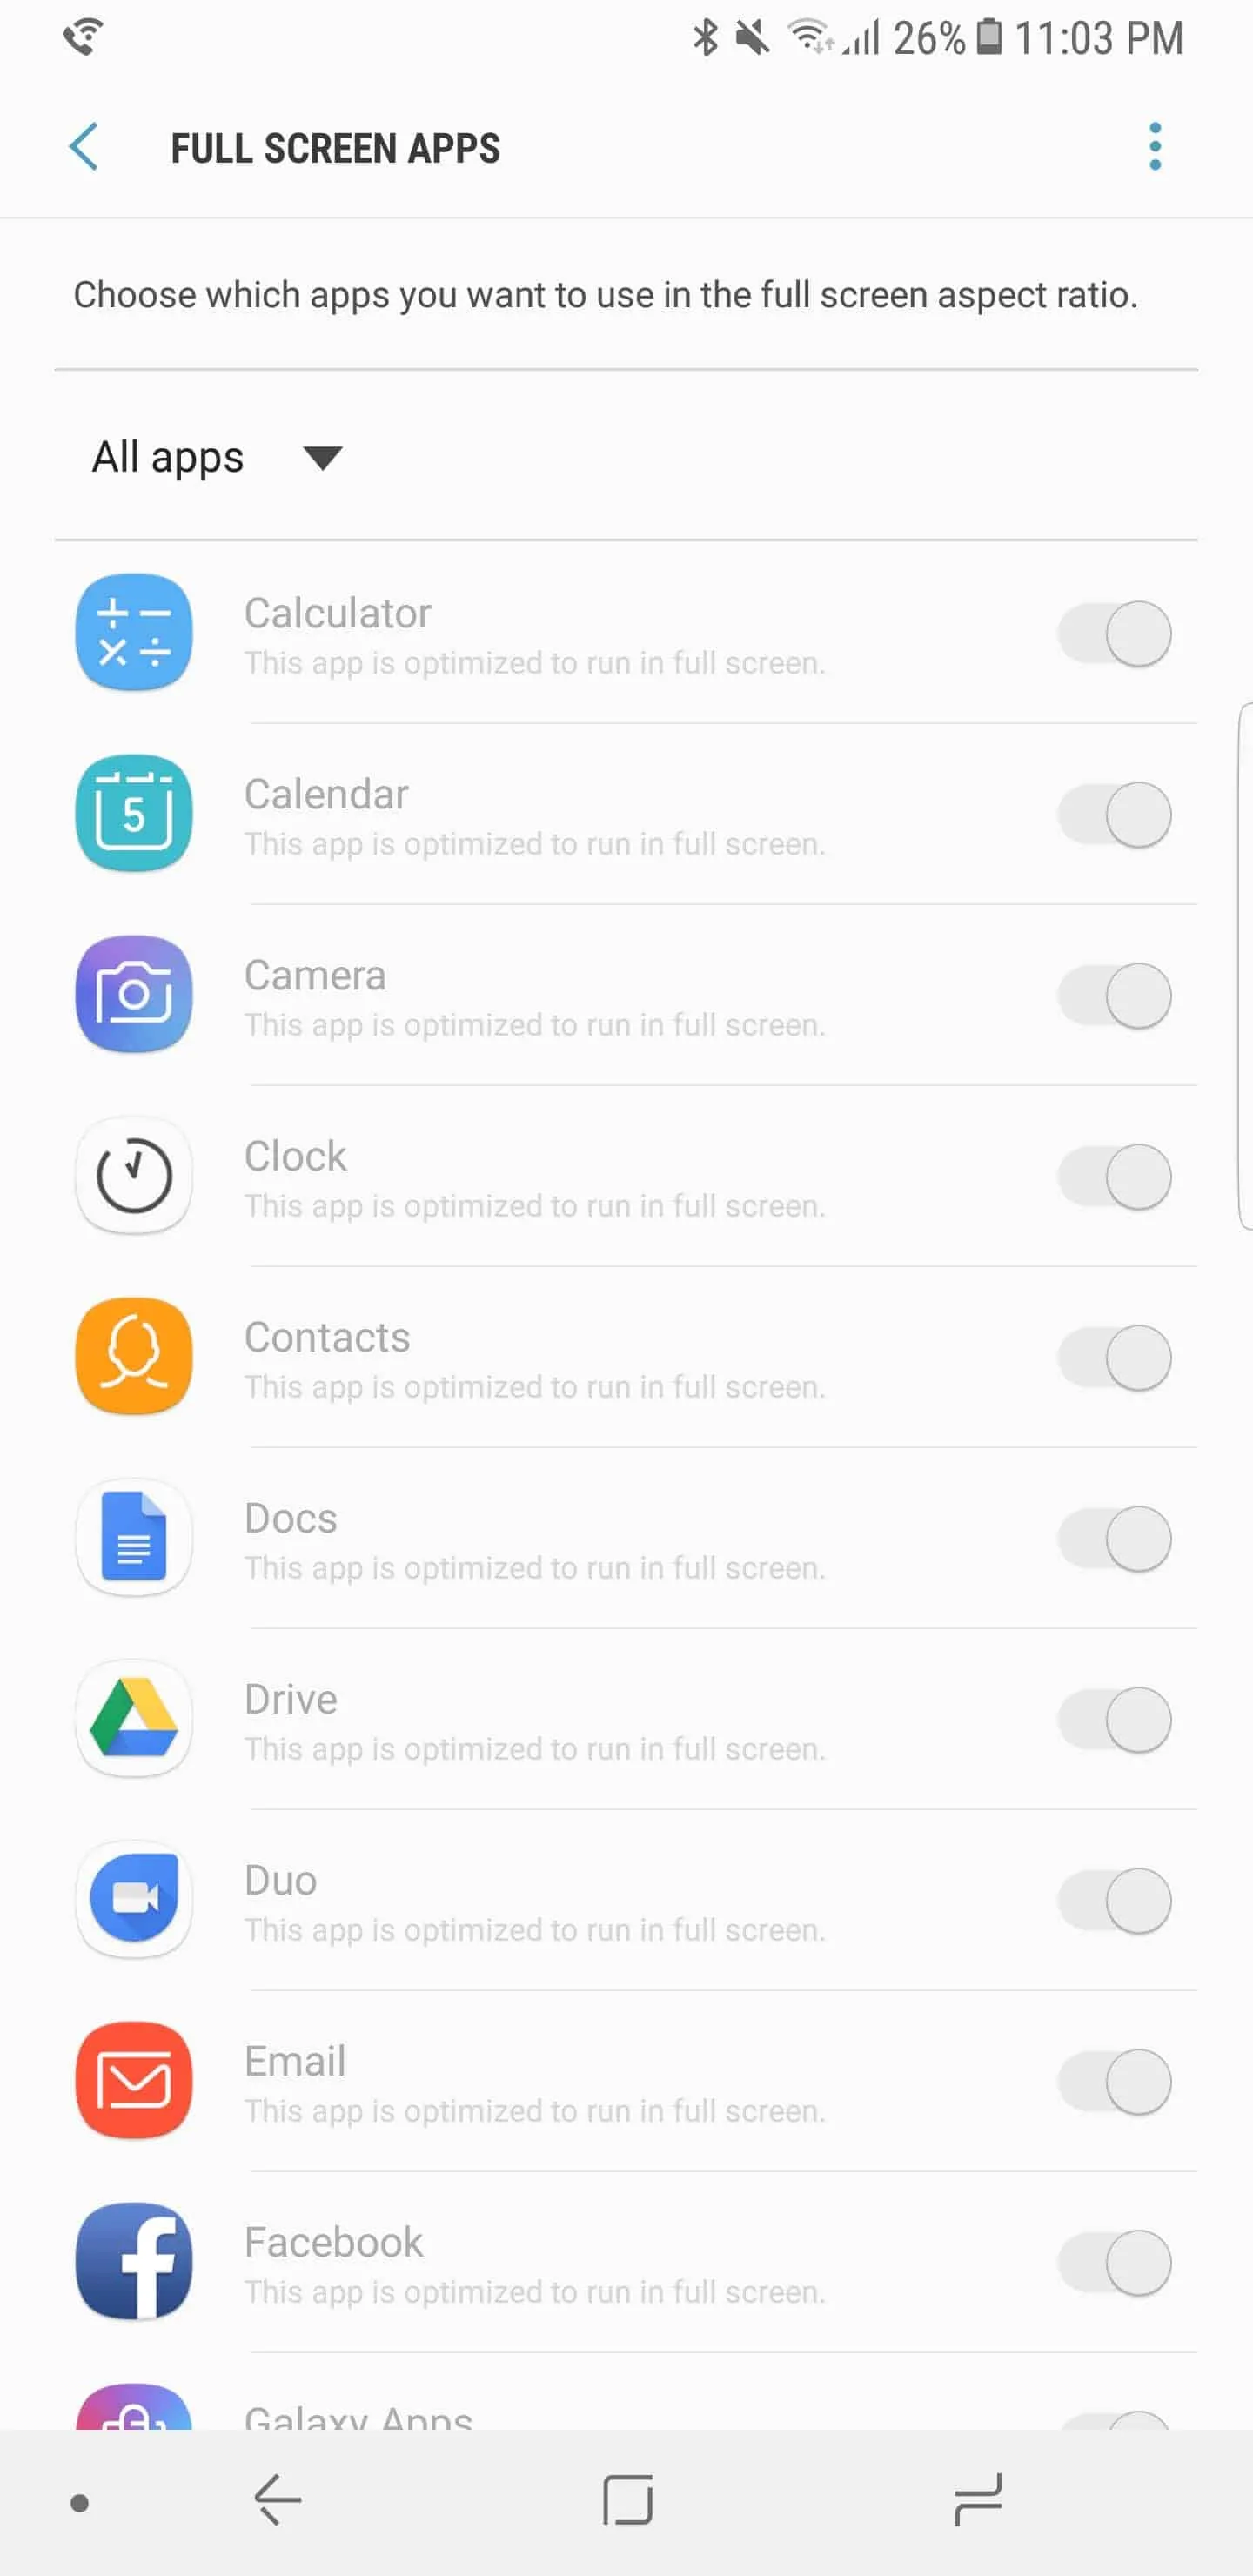 Samsung Galaxy Note 8 AH NS Screenshots display full screen apps